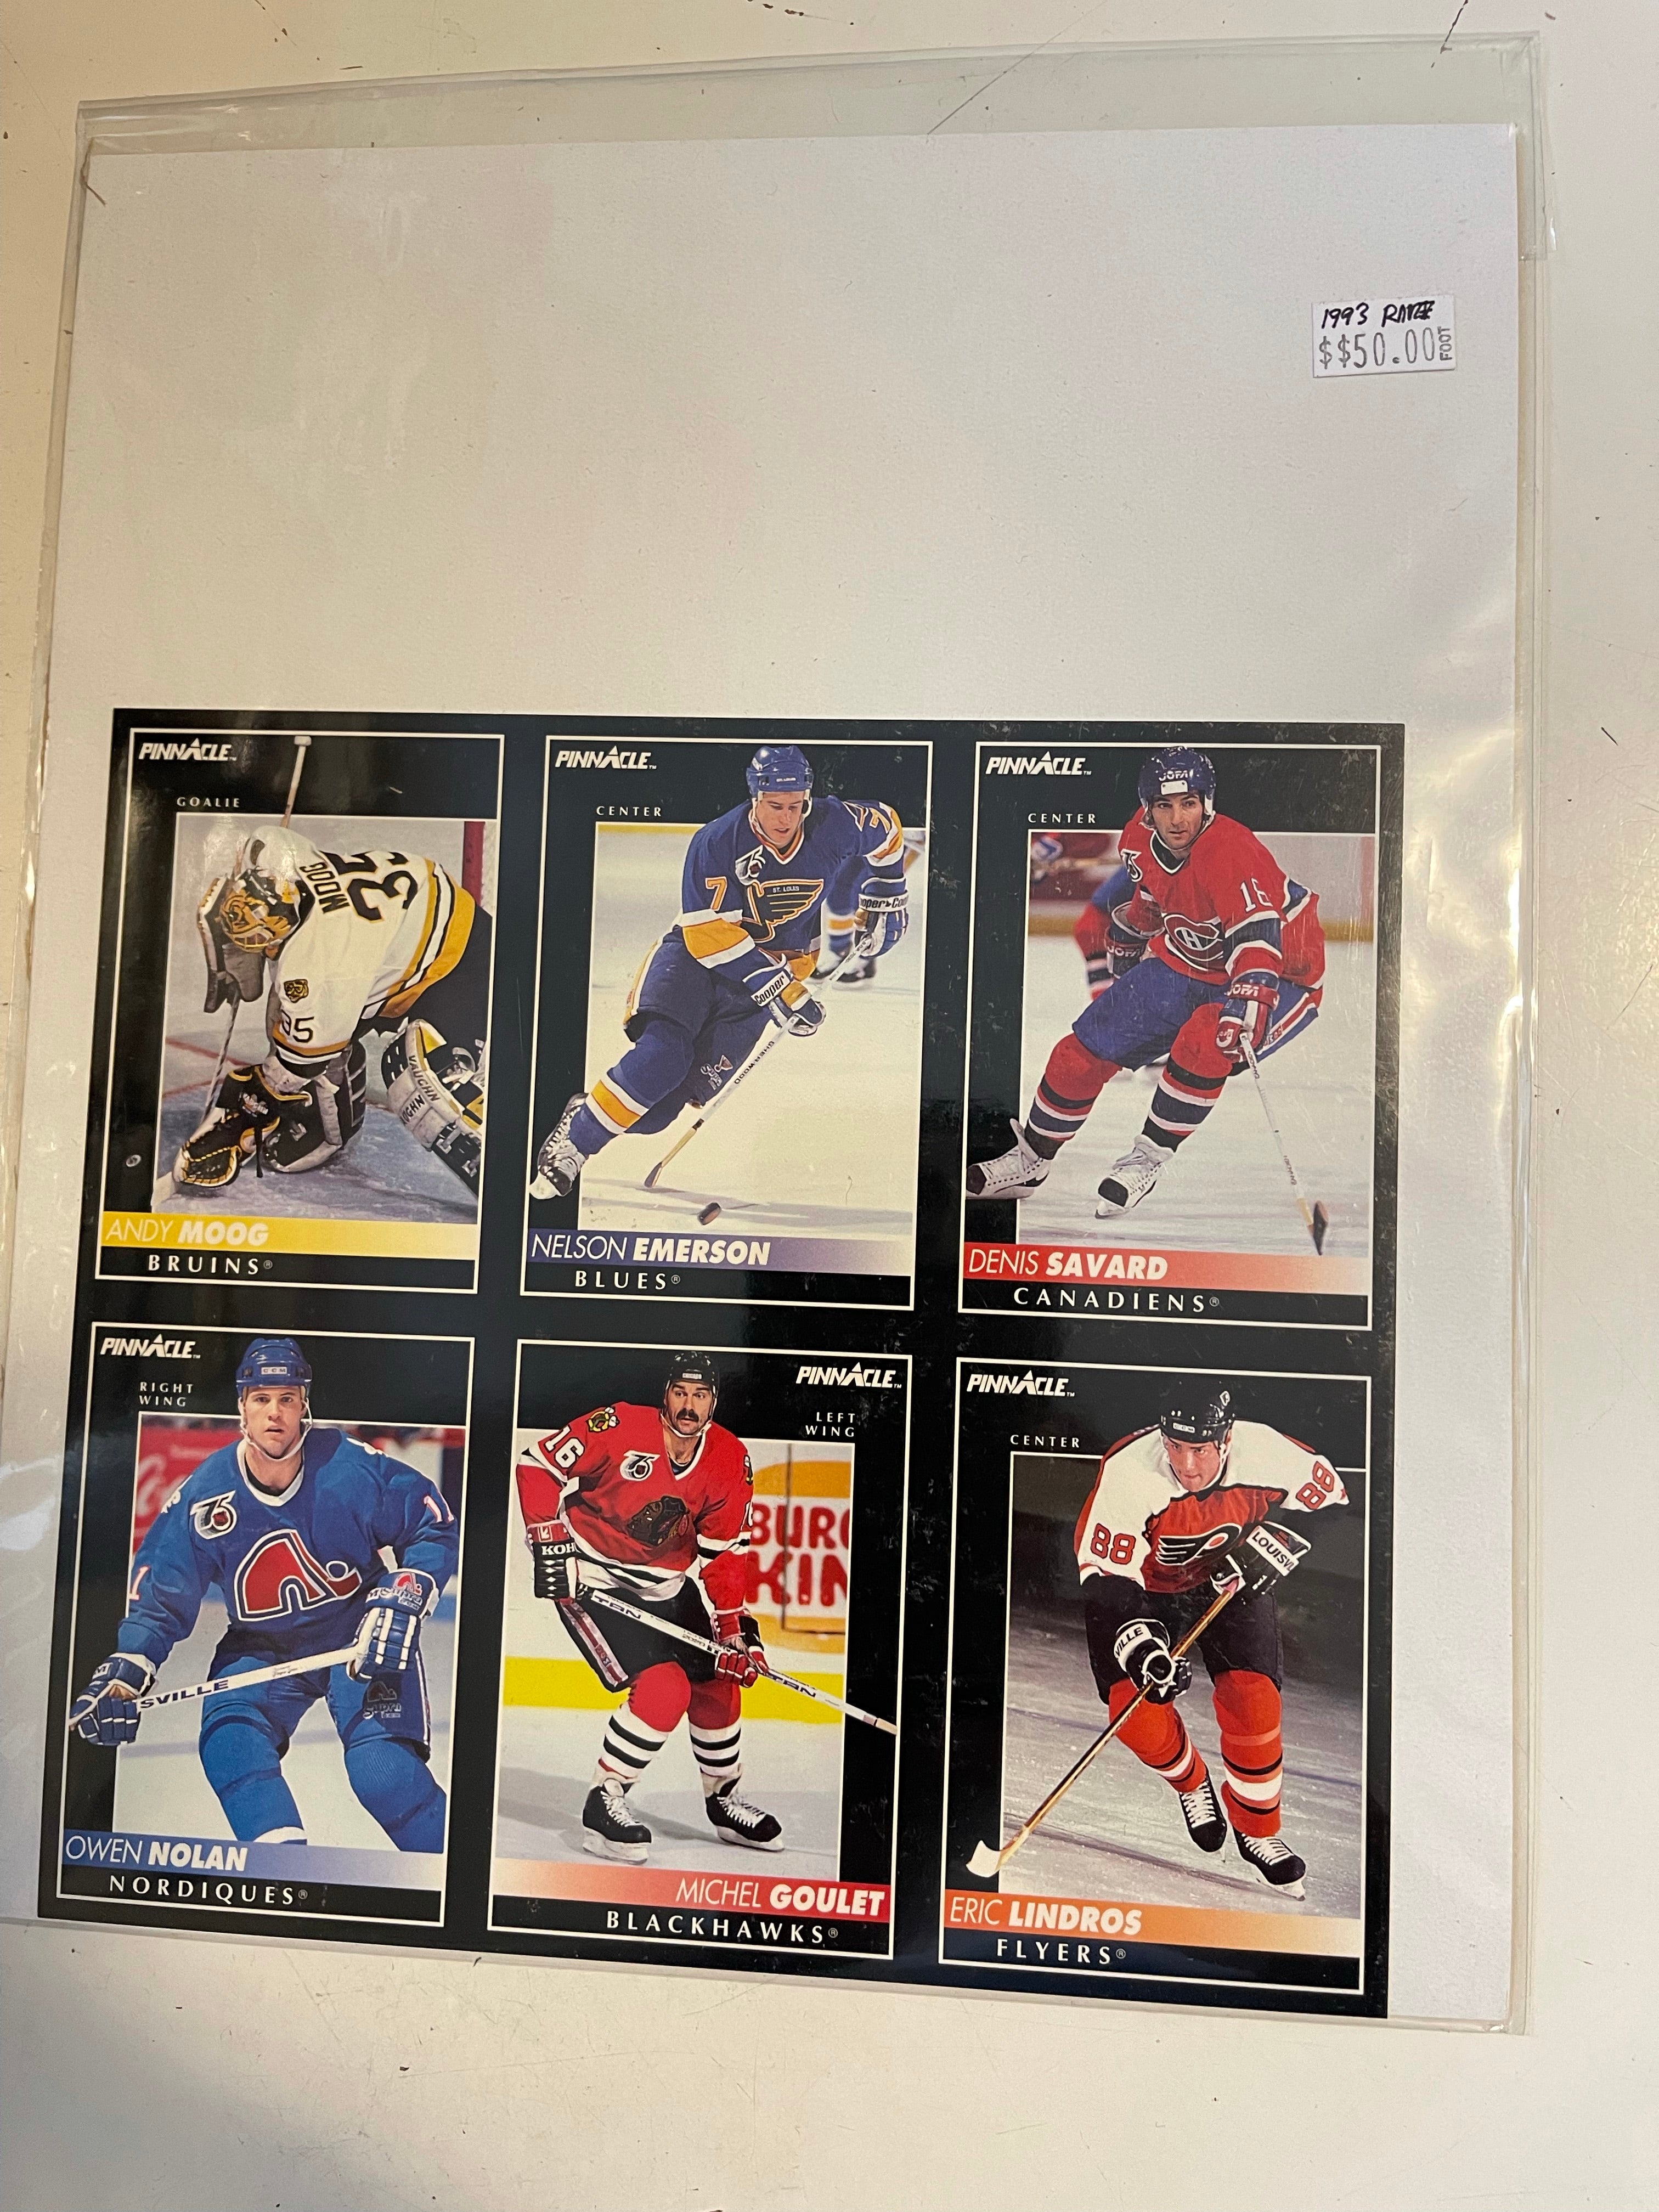 1993 Score Pinnacle hockey uncut cards sheet 1993